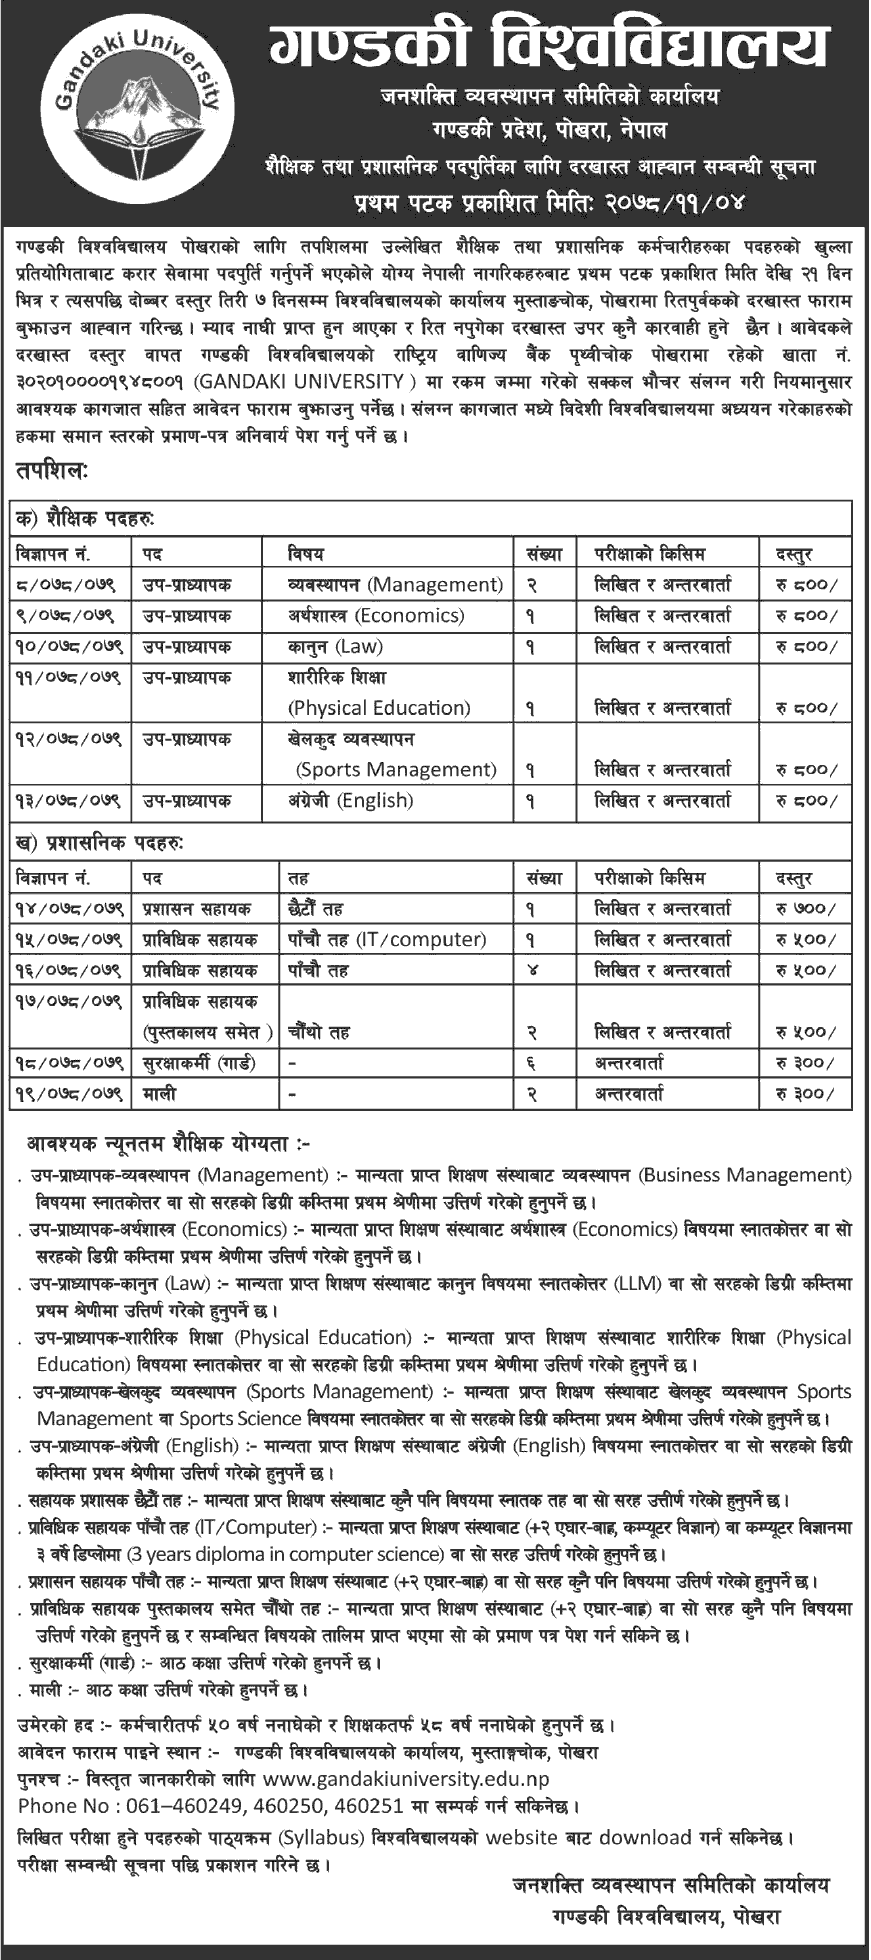 Gandaki University Vacancy for Various Post